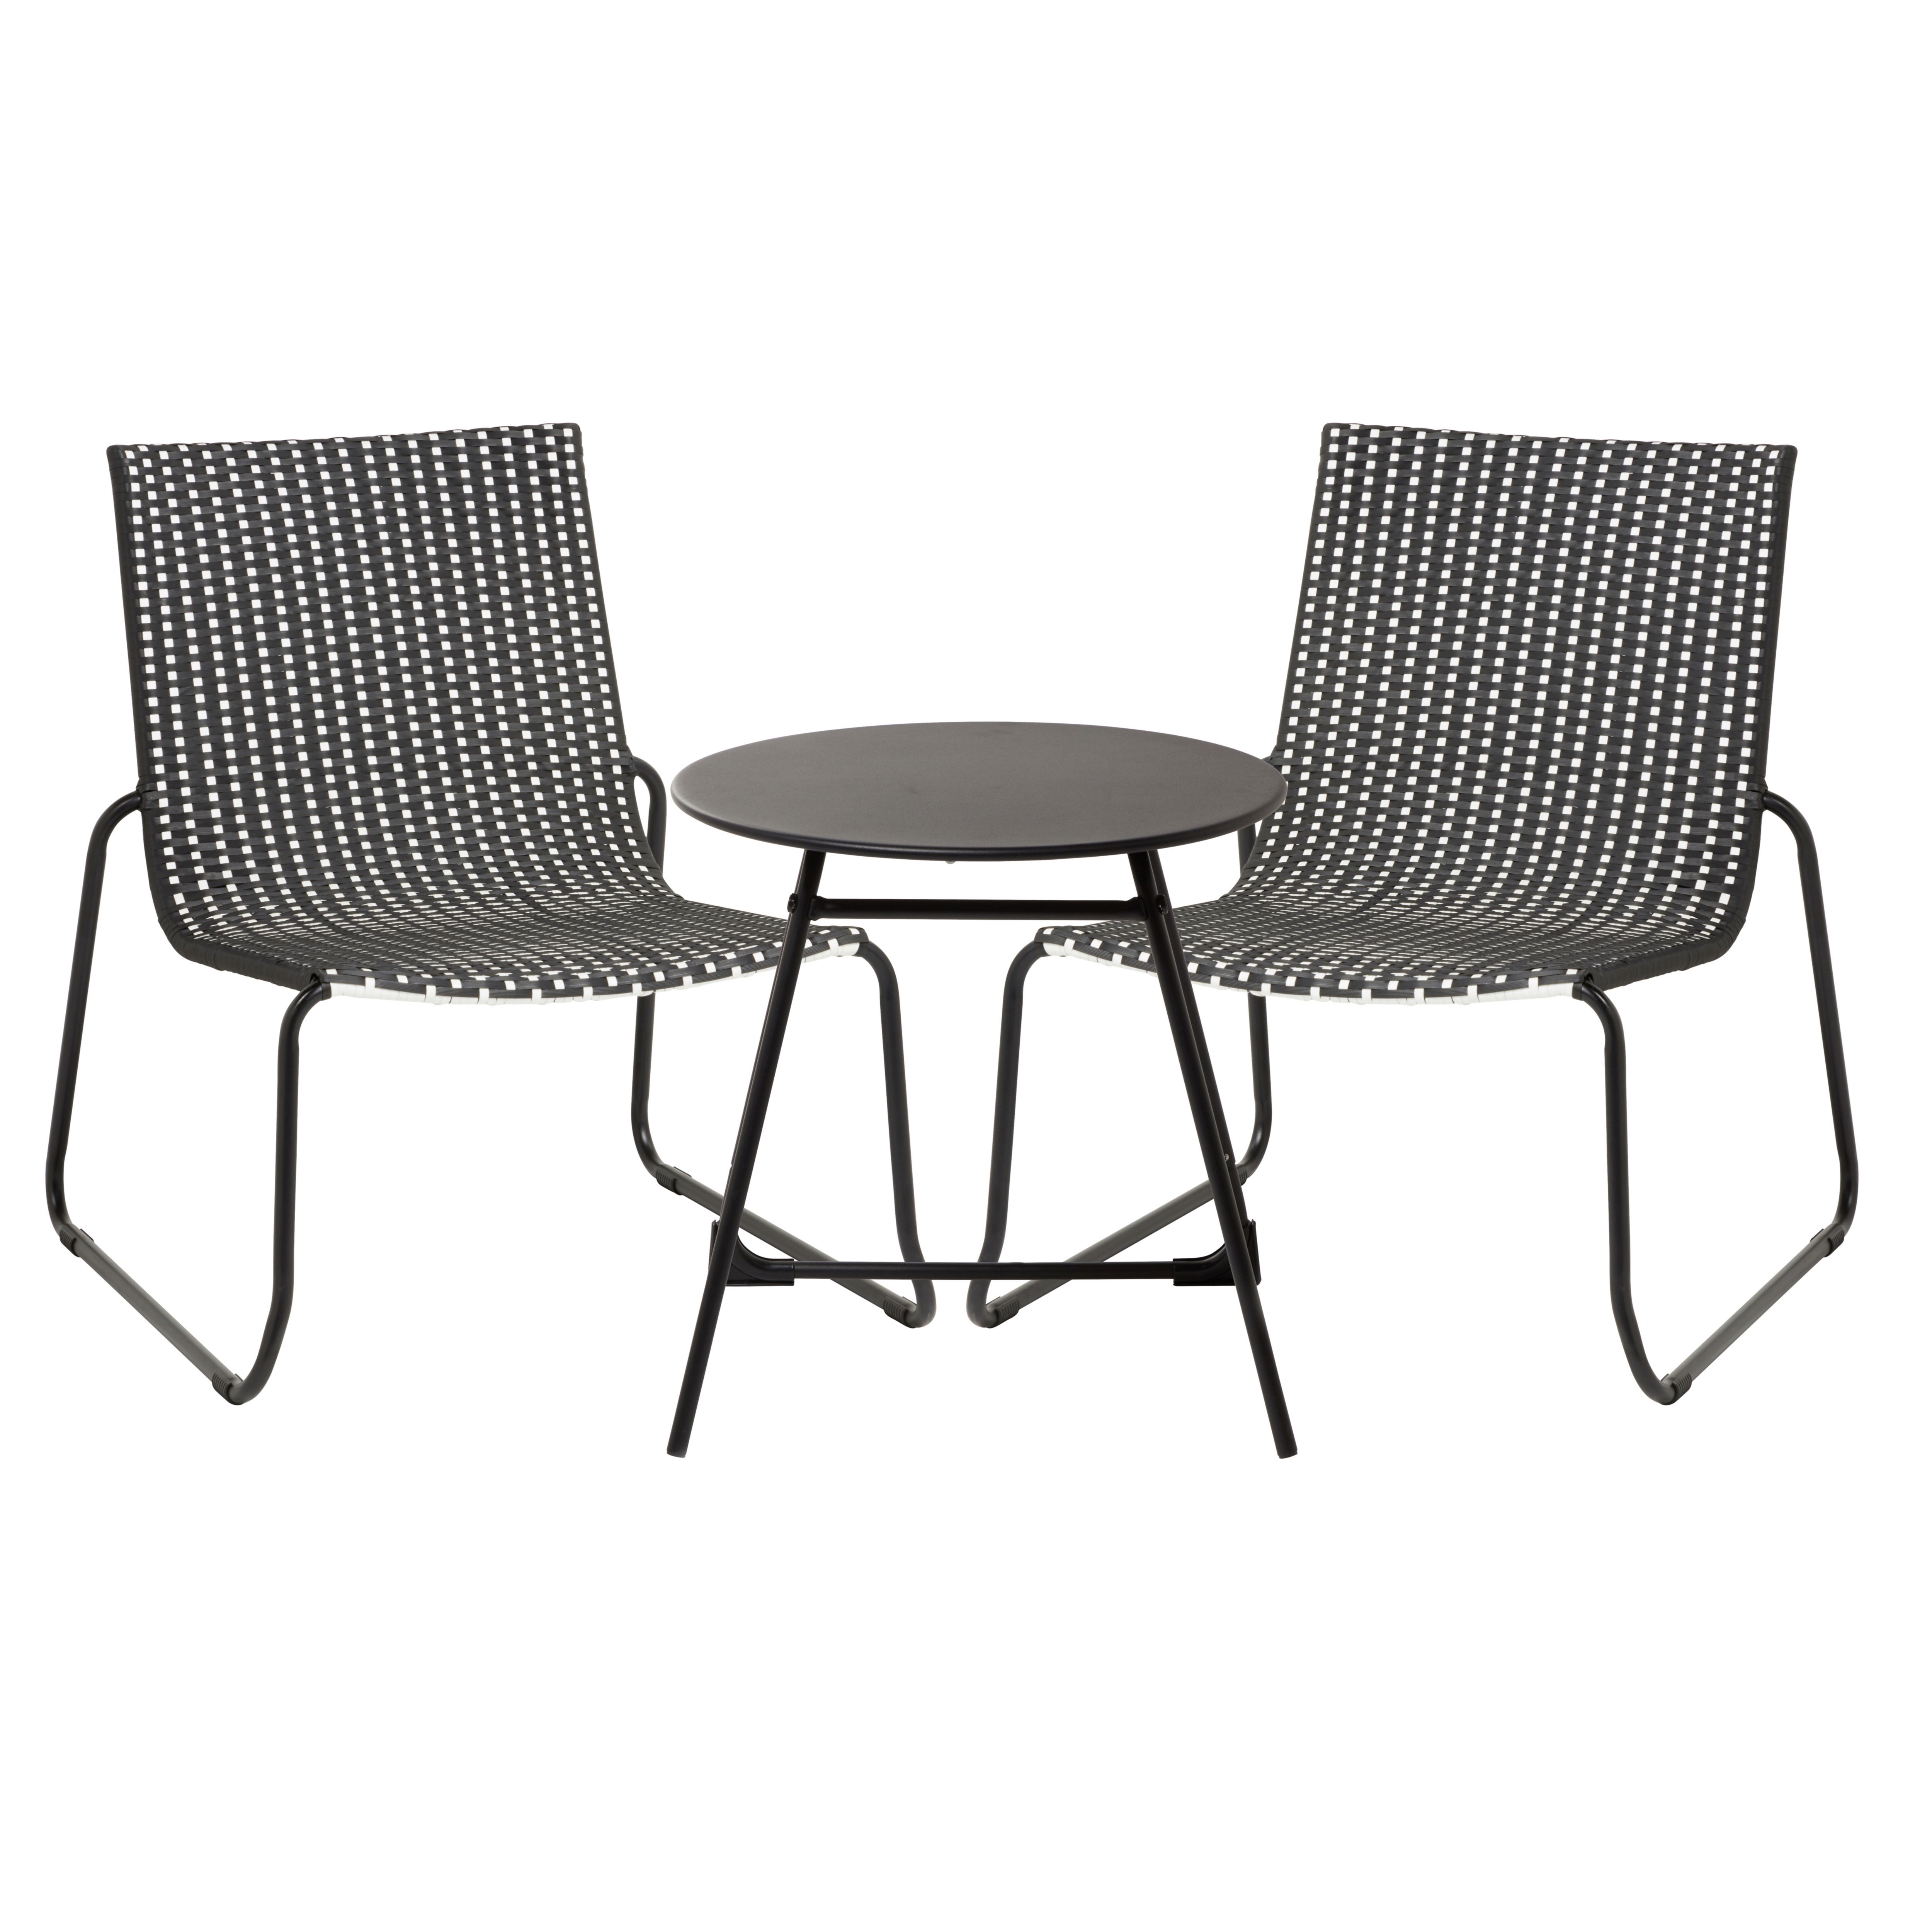 Morillo Metal 2 seater Table & chair set